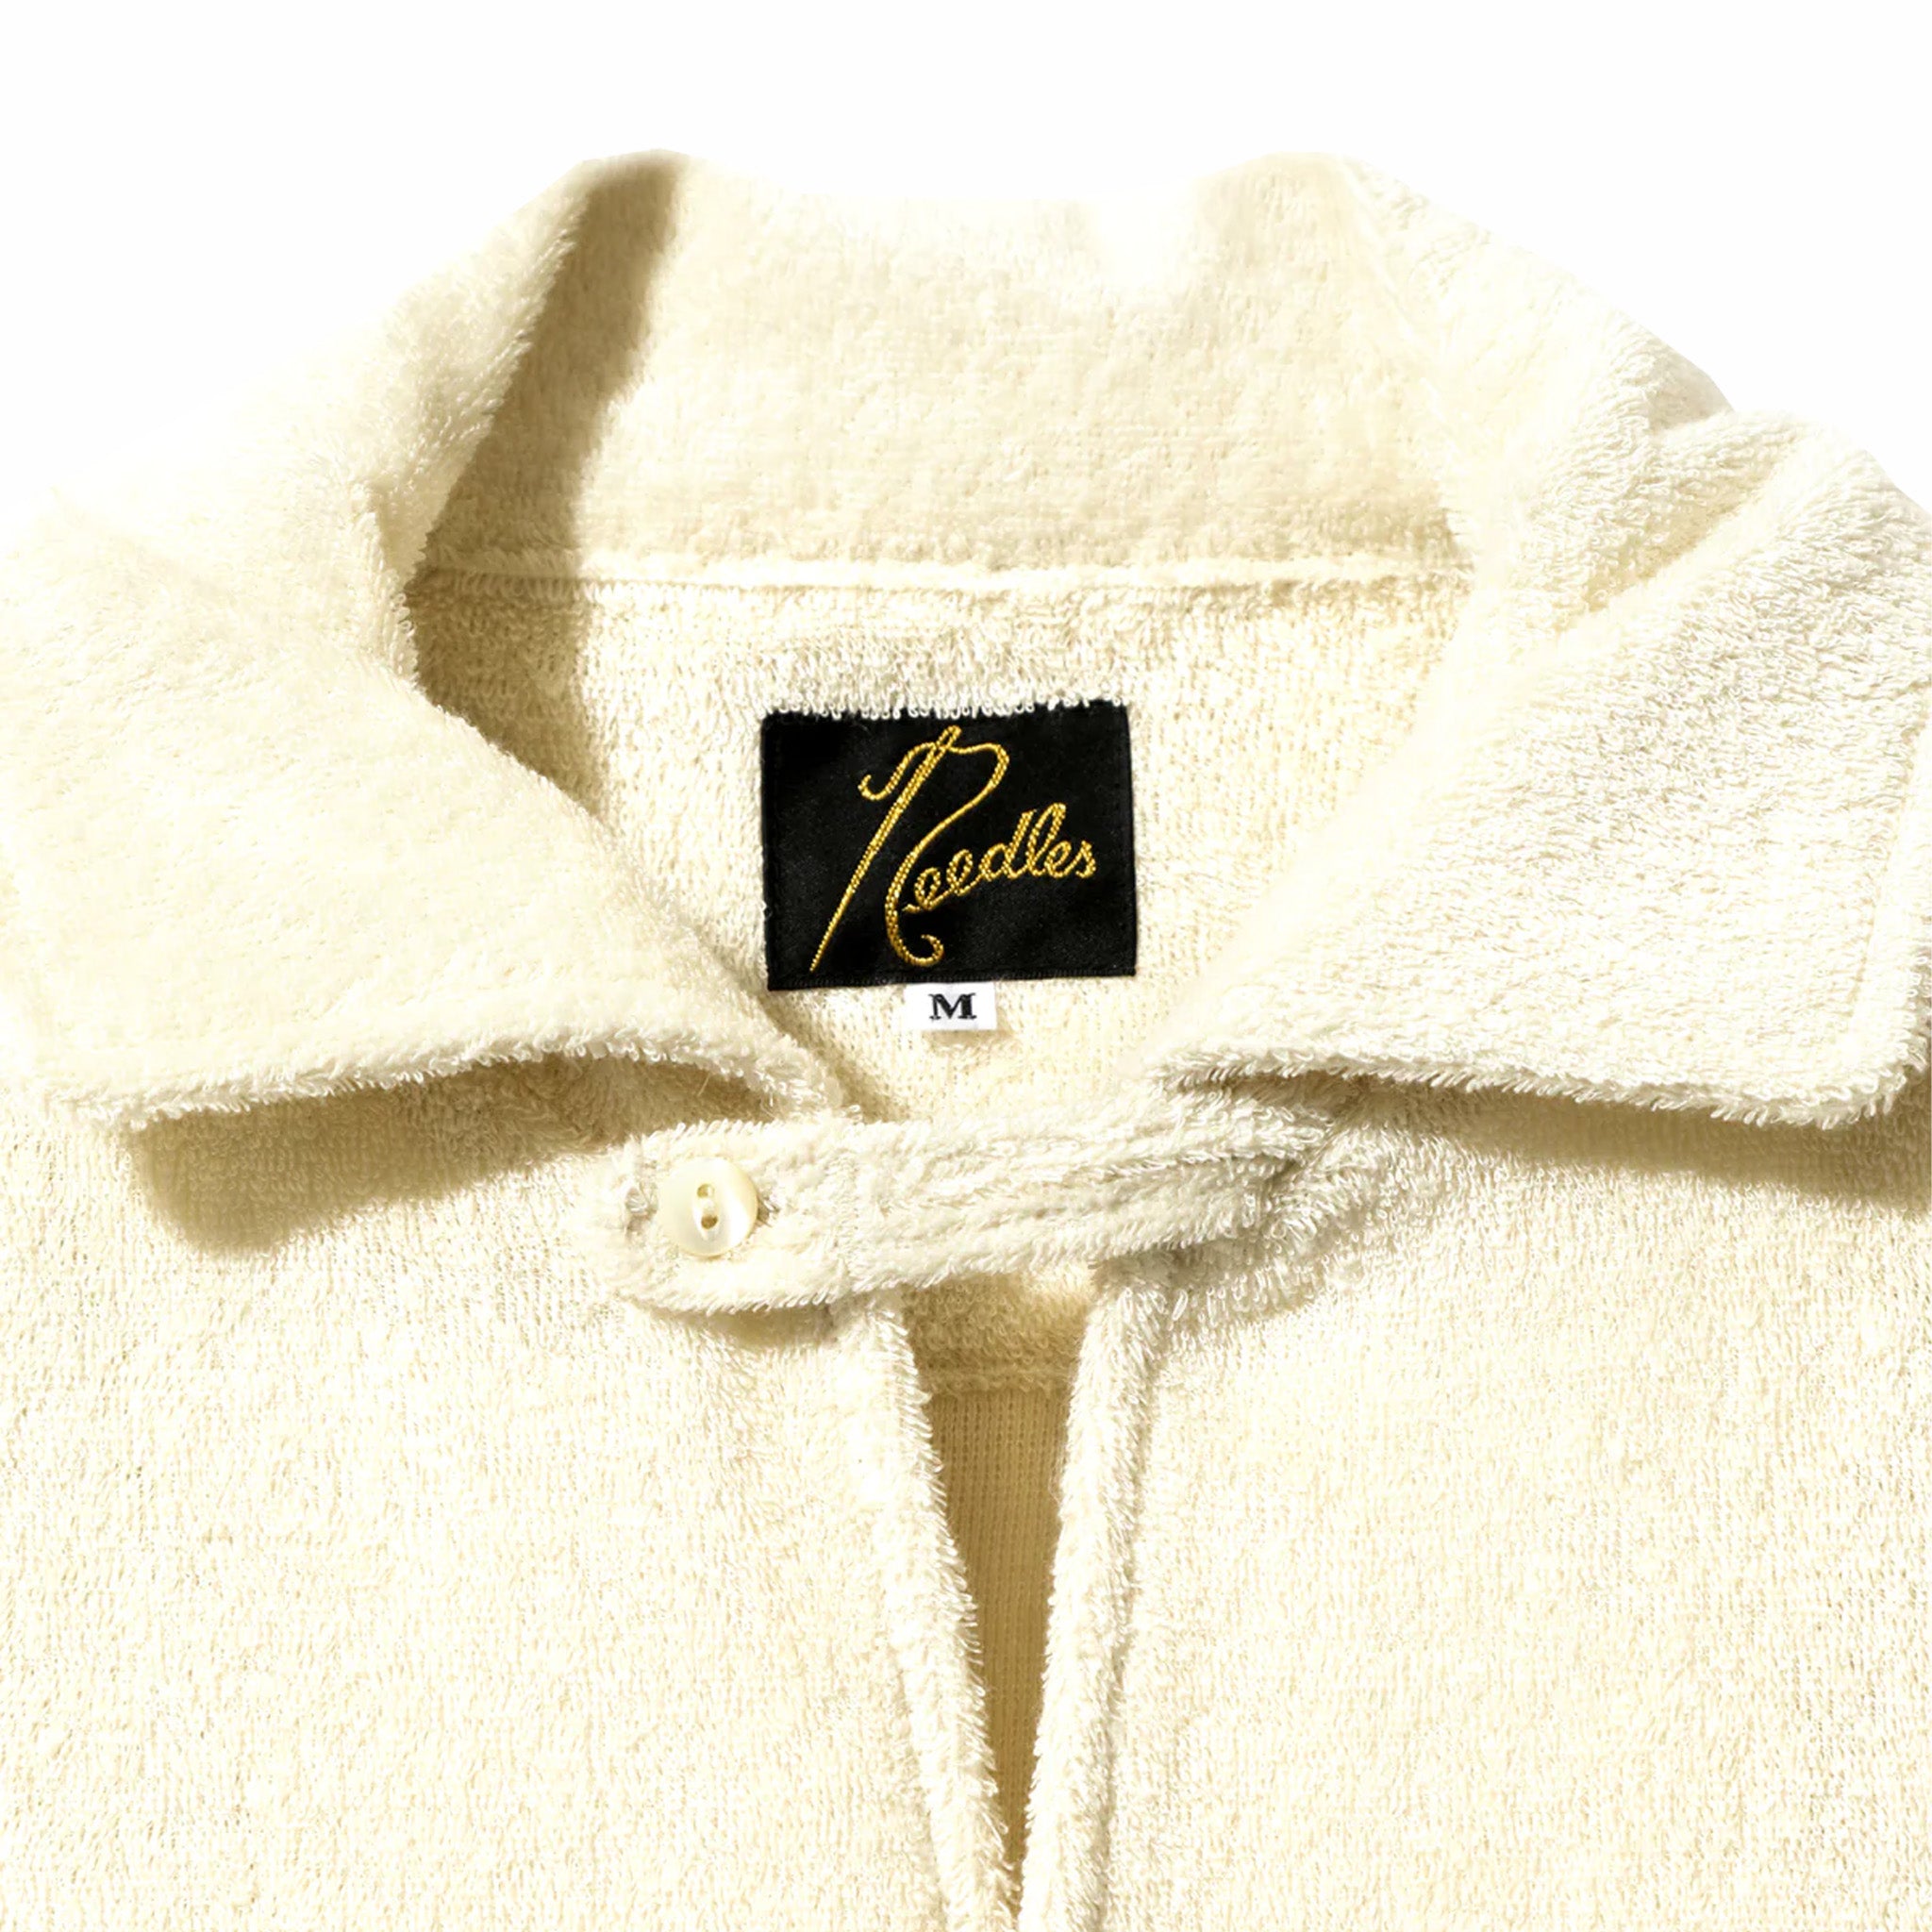 Needles Italian Collar Shirt - LI/PE Pile Jersey (Off White) - August Shop